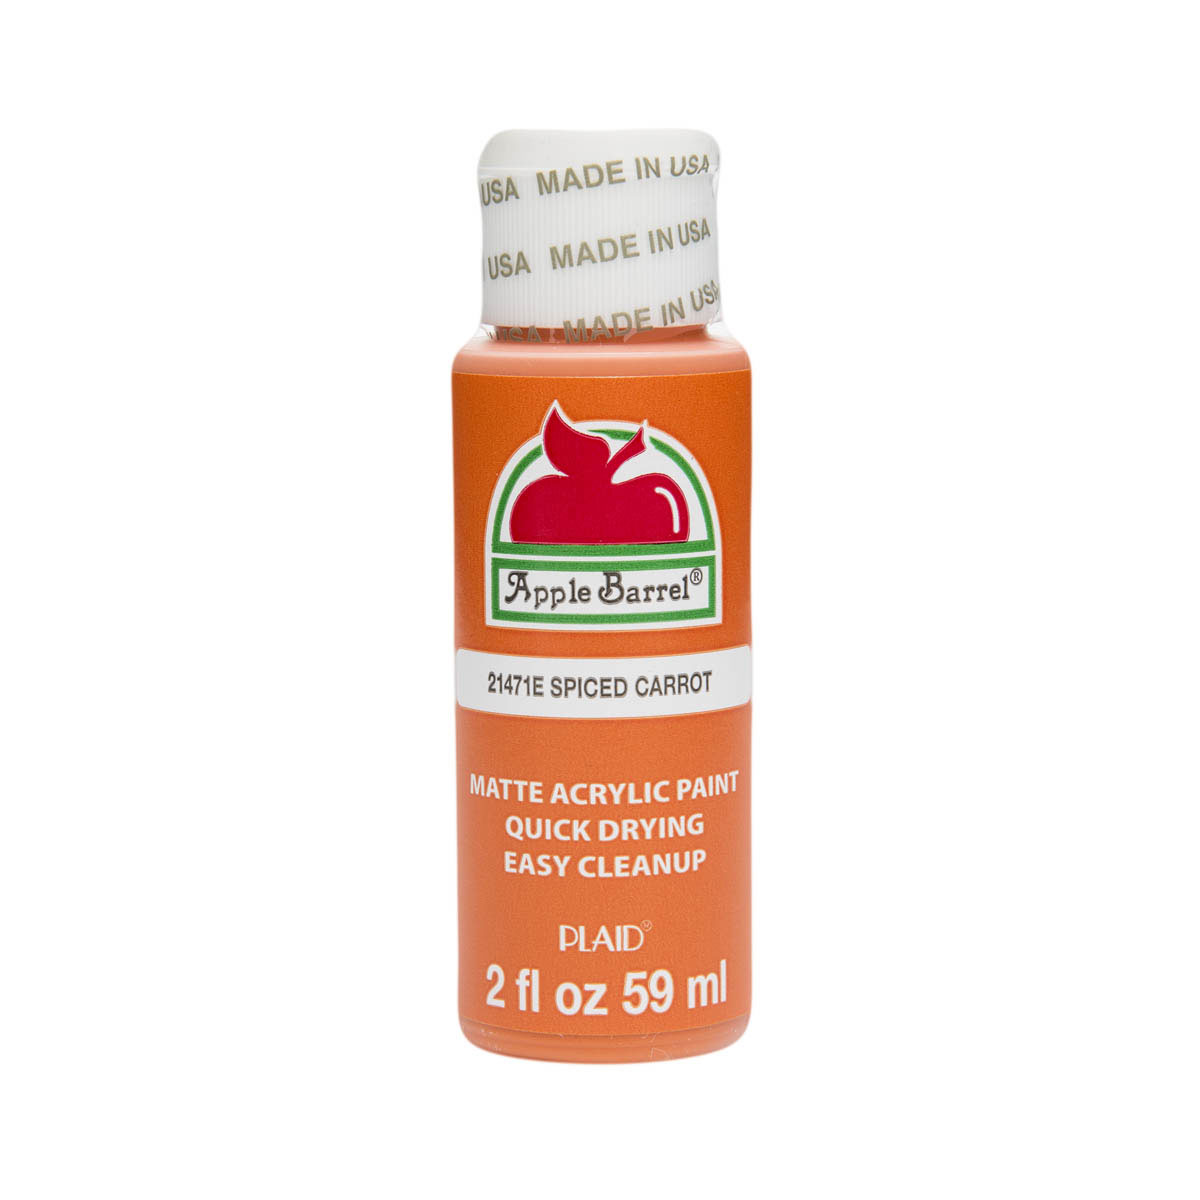 Apple Barrel ® Colors - Spiced Carrot, 2 oz. - 21471